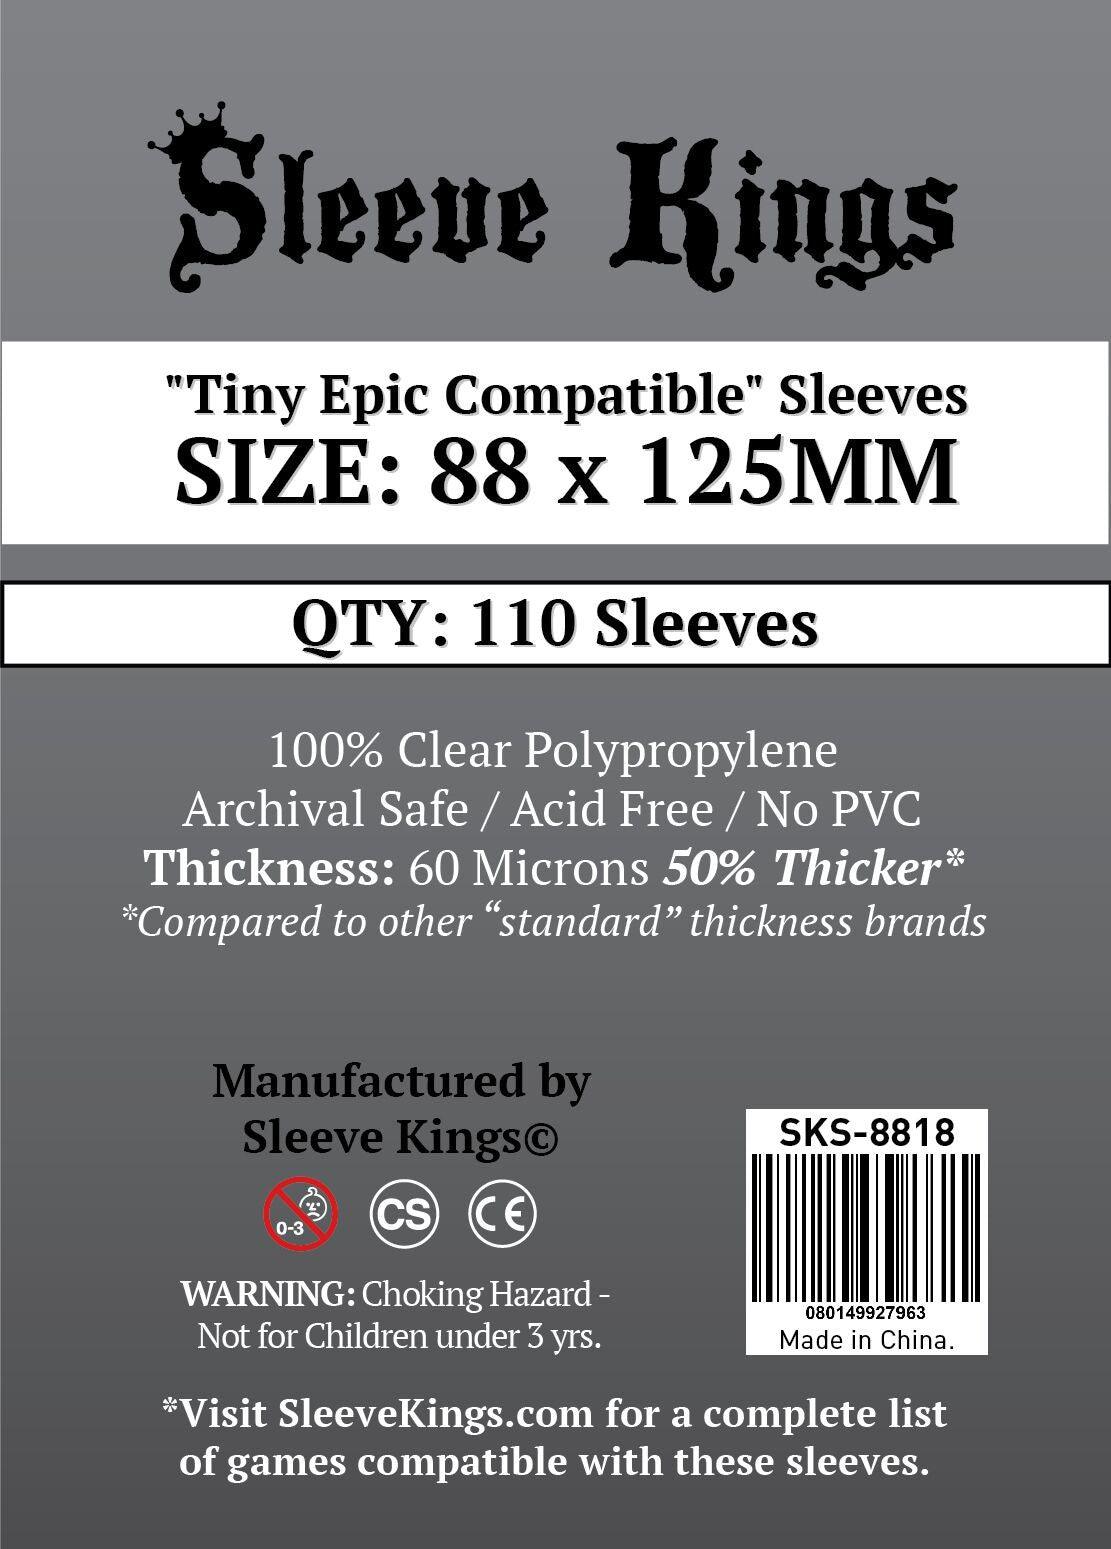 VR-67709 Sleeve Kings Board Game Sleeves "Tiny Epic Compatible" (88mm x 125mm) (110 Sleeves Per Pack) - Sleeve Kings - Titan Pop Culture